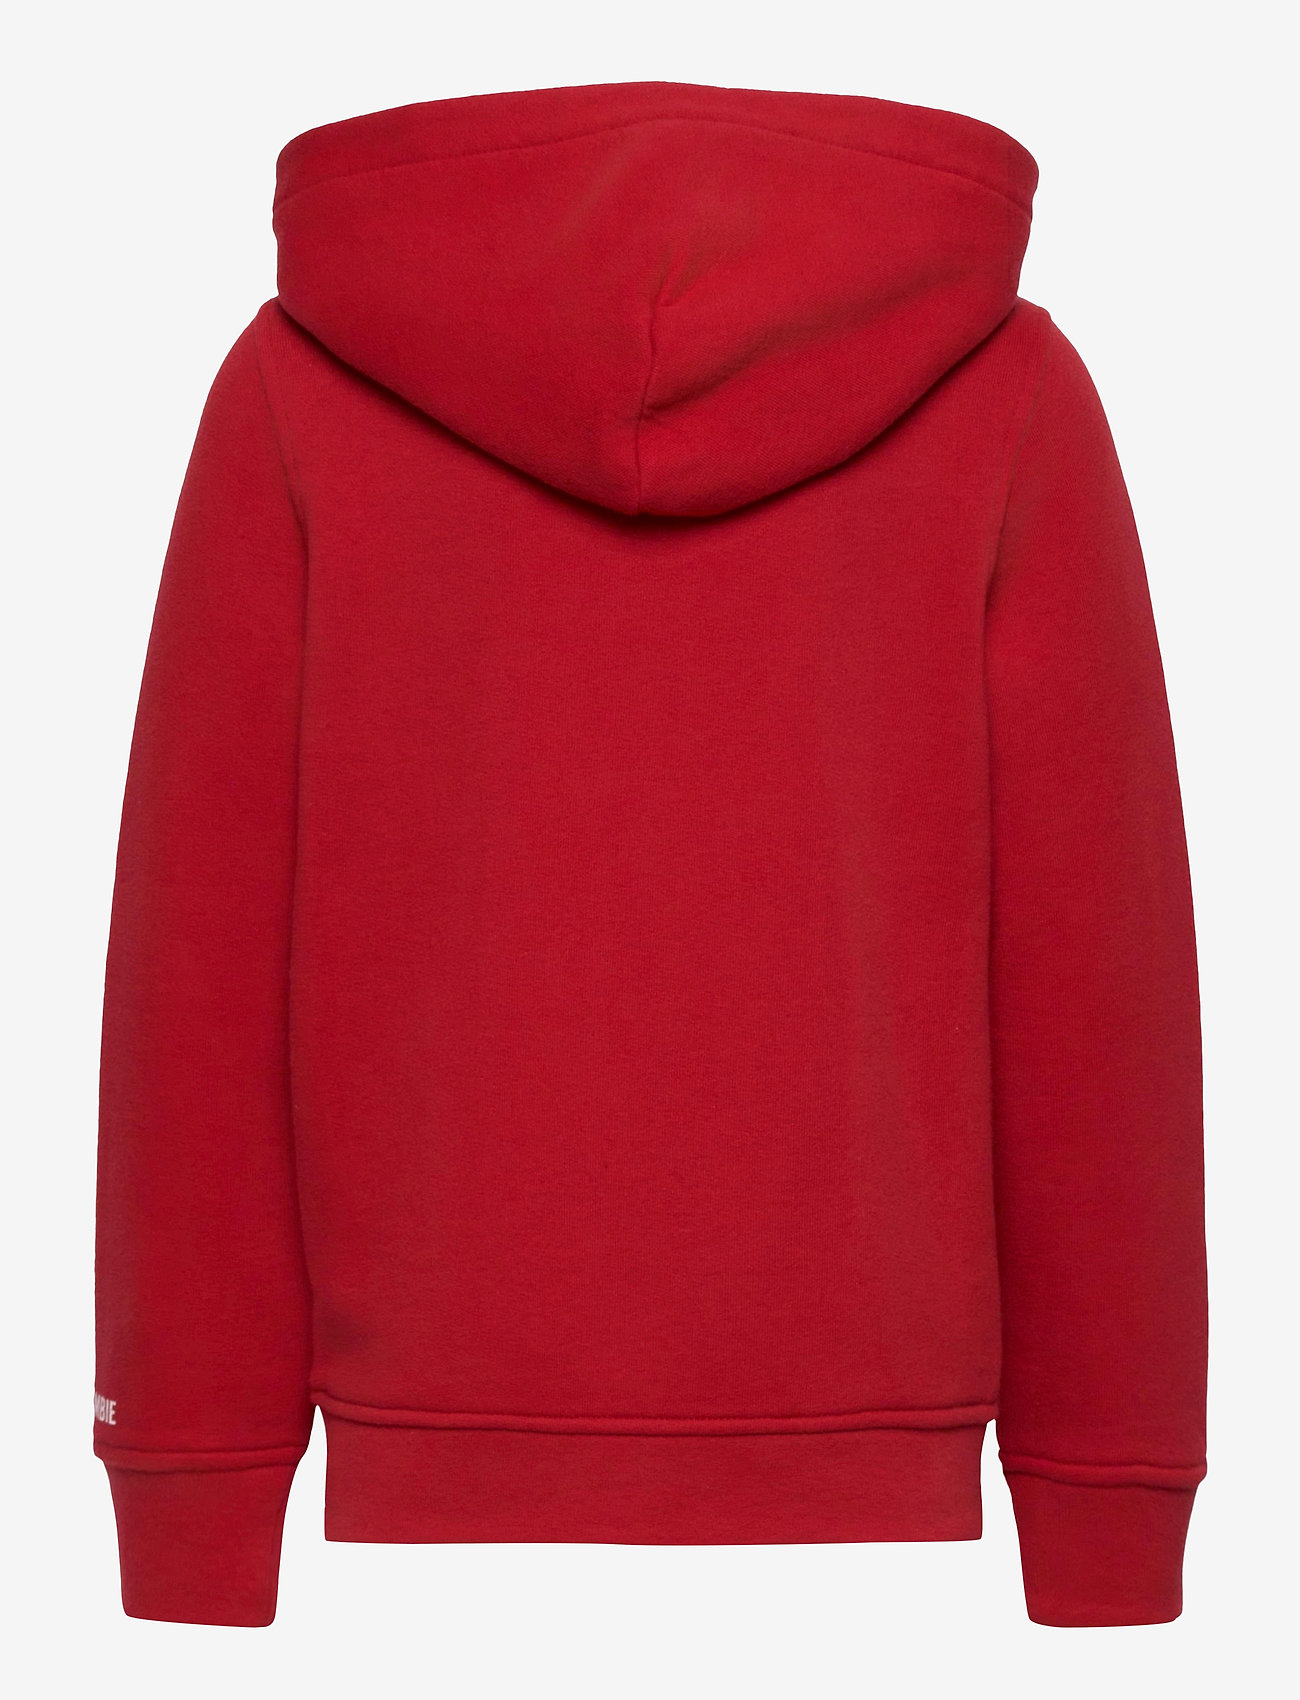 abercrombie red hoodie